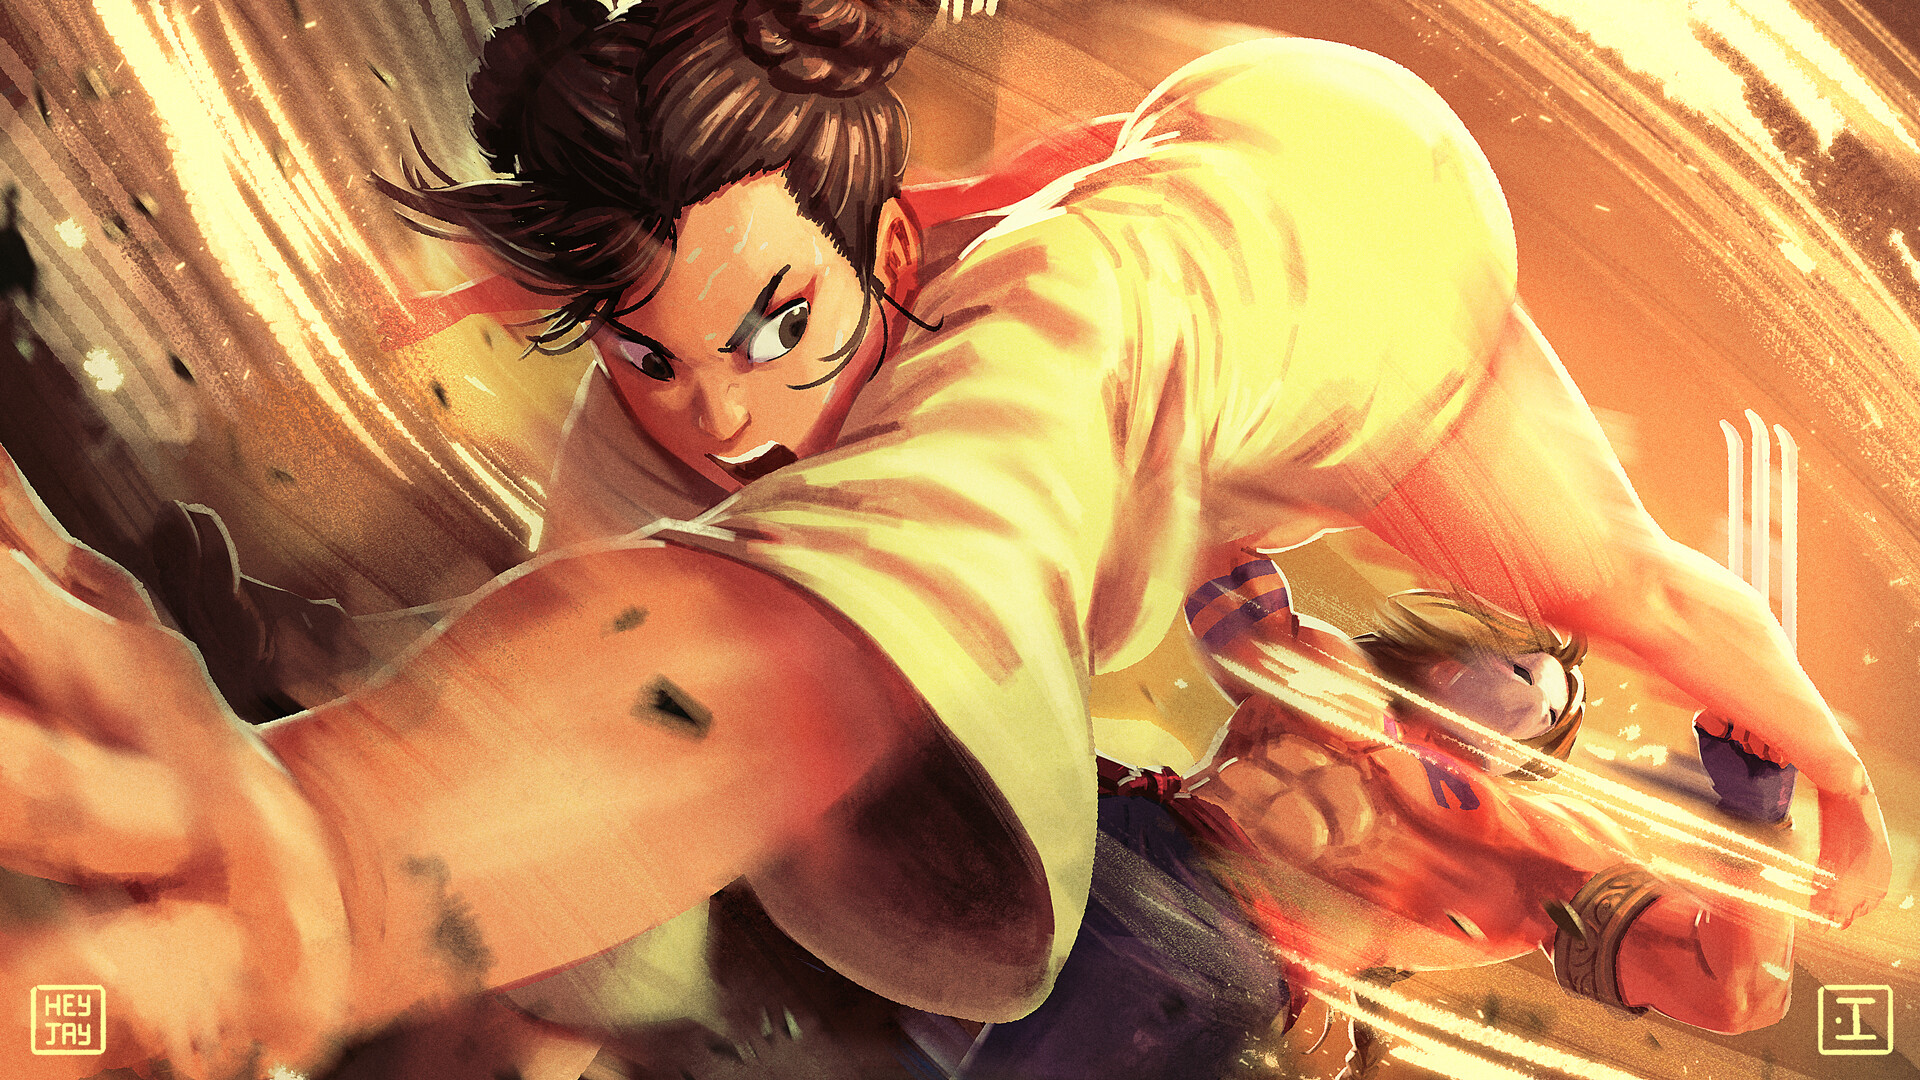 Chun-Li vs. Vega's iconic Street Fighter 2 animated movie fight